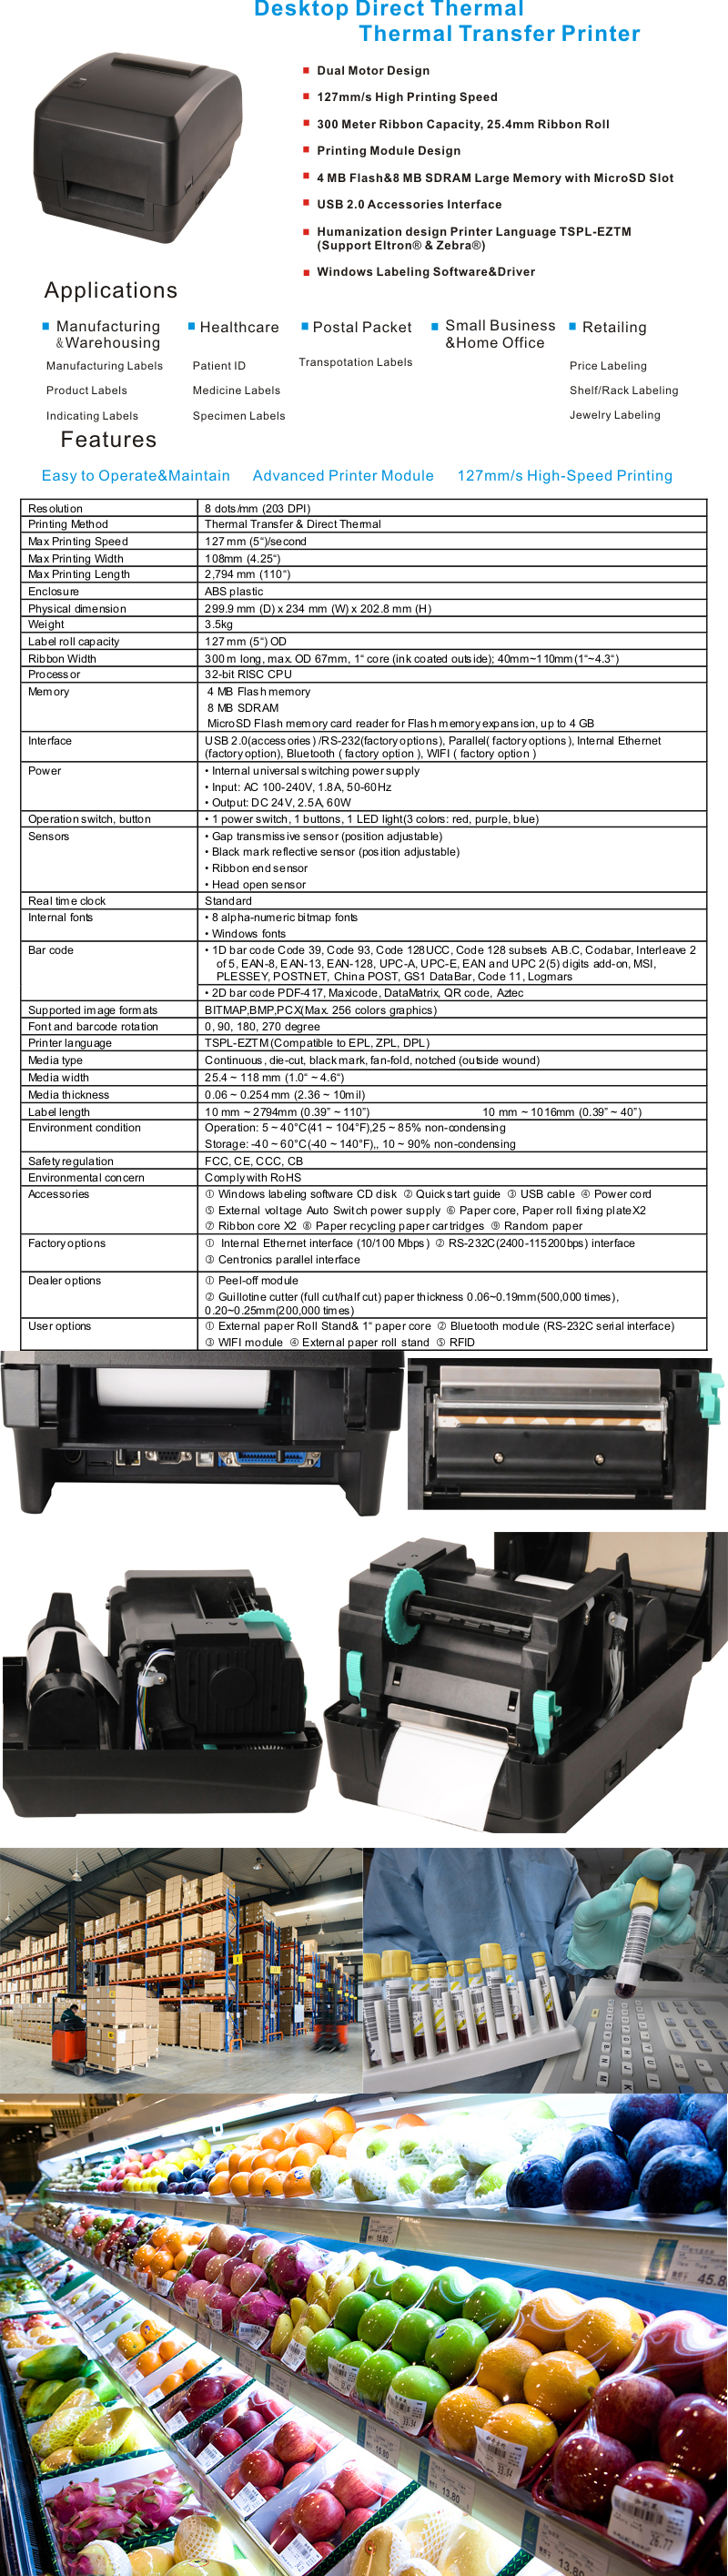 sirene Vandret cerebrum EUCCOI EC110BE 4 inch Thermal transfer & Direct Thermal Label Printer